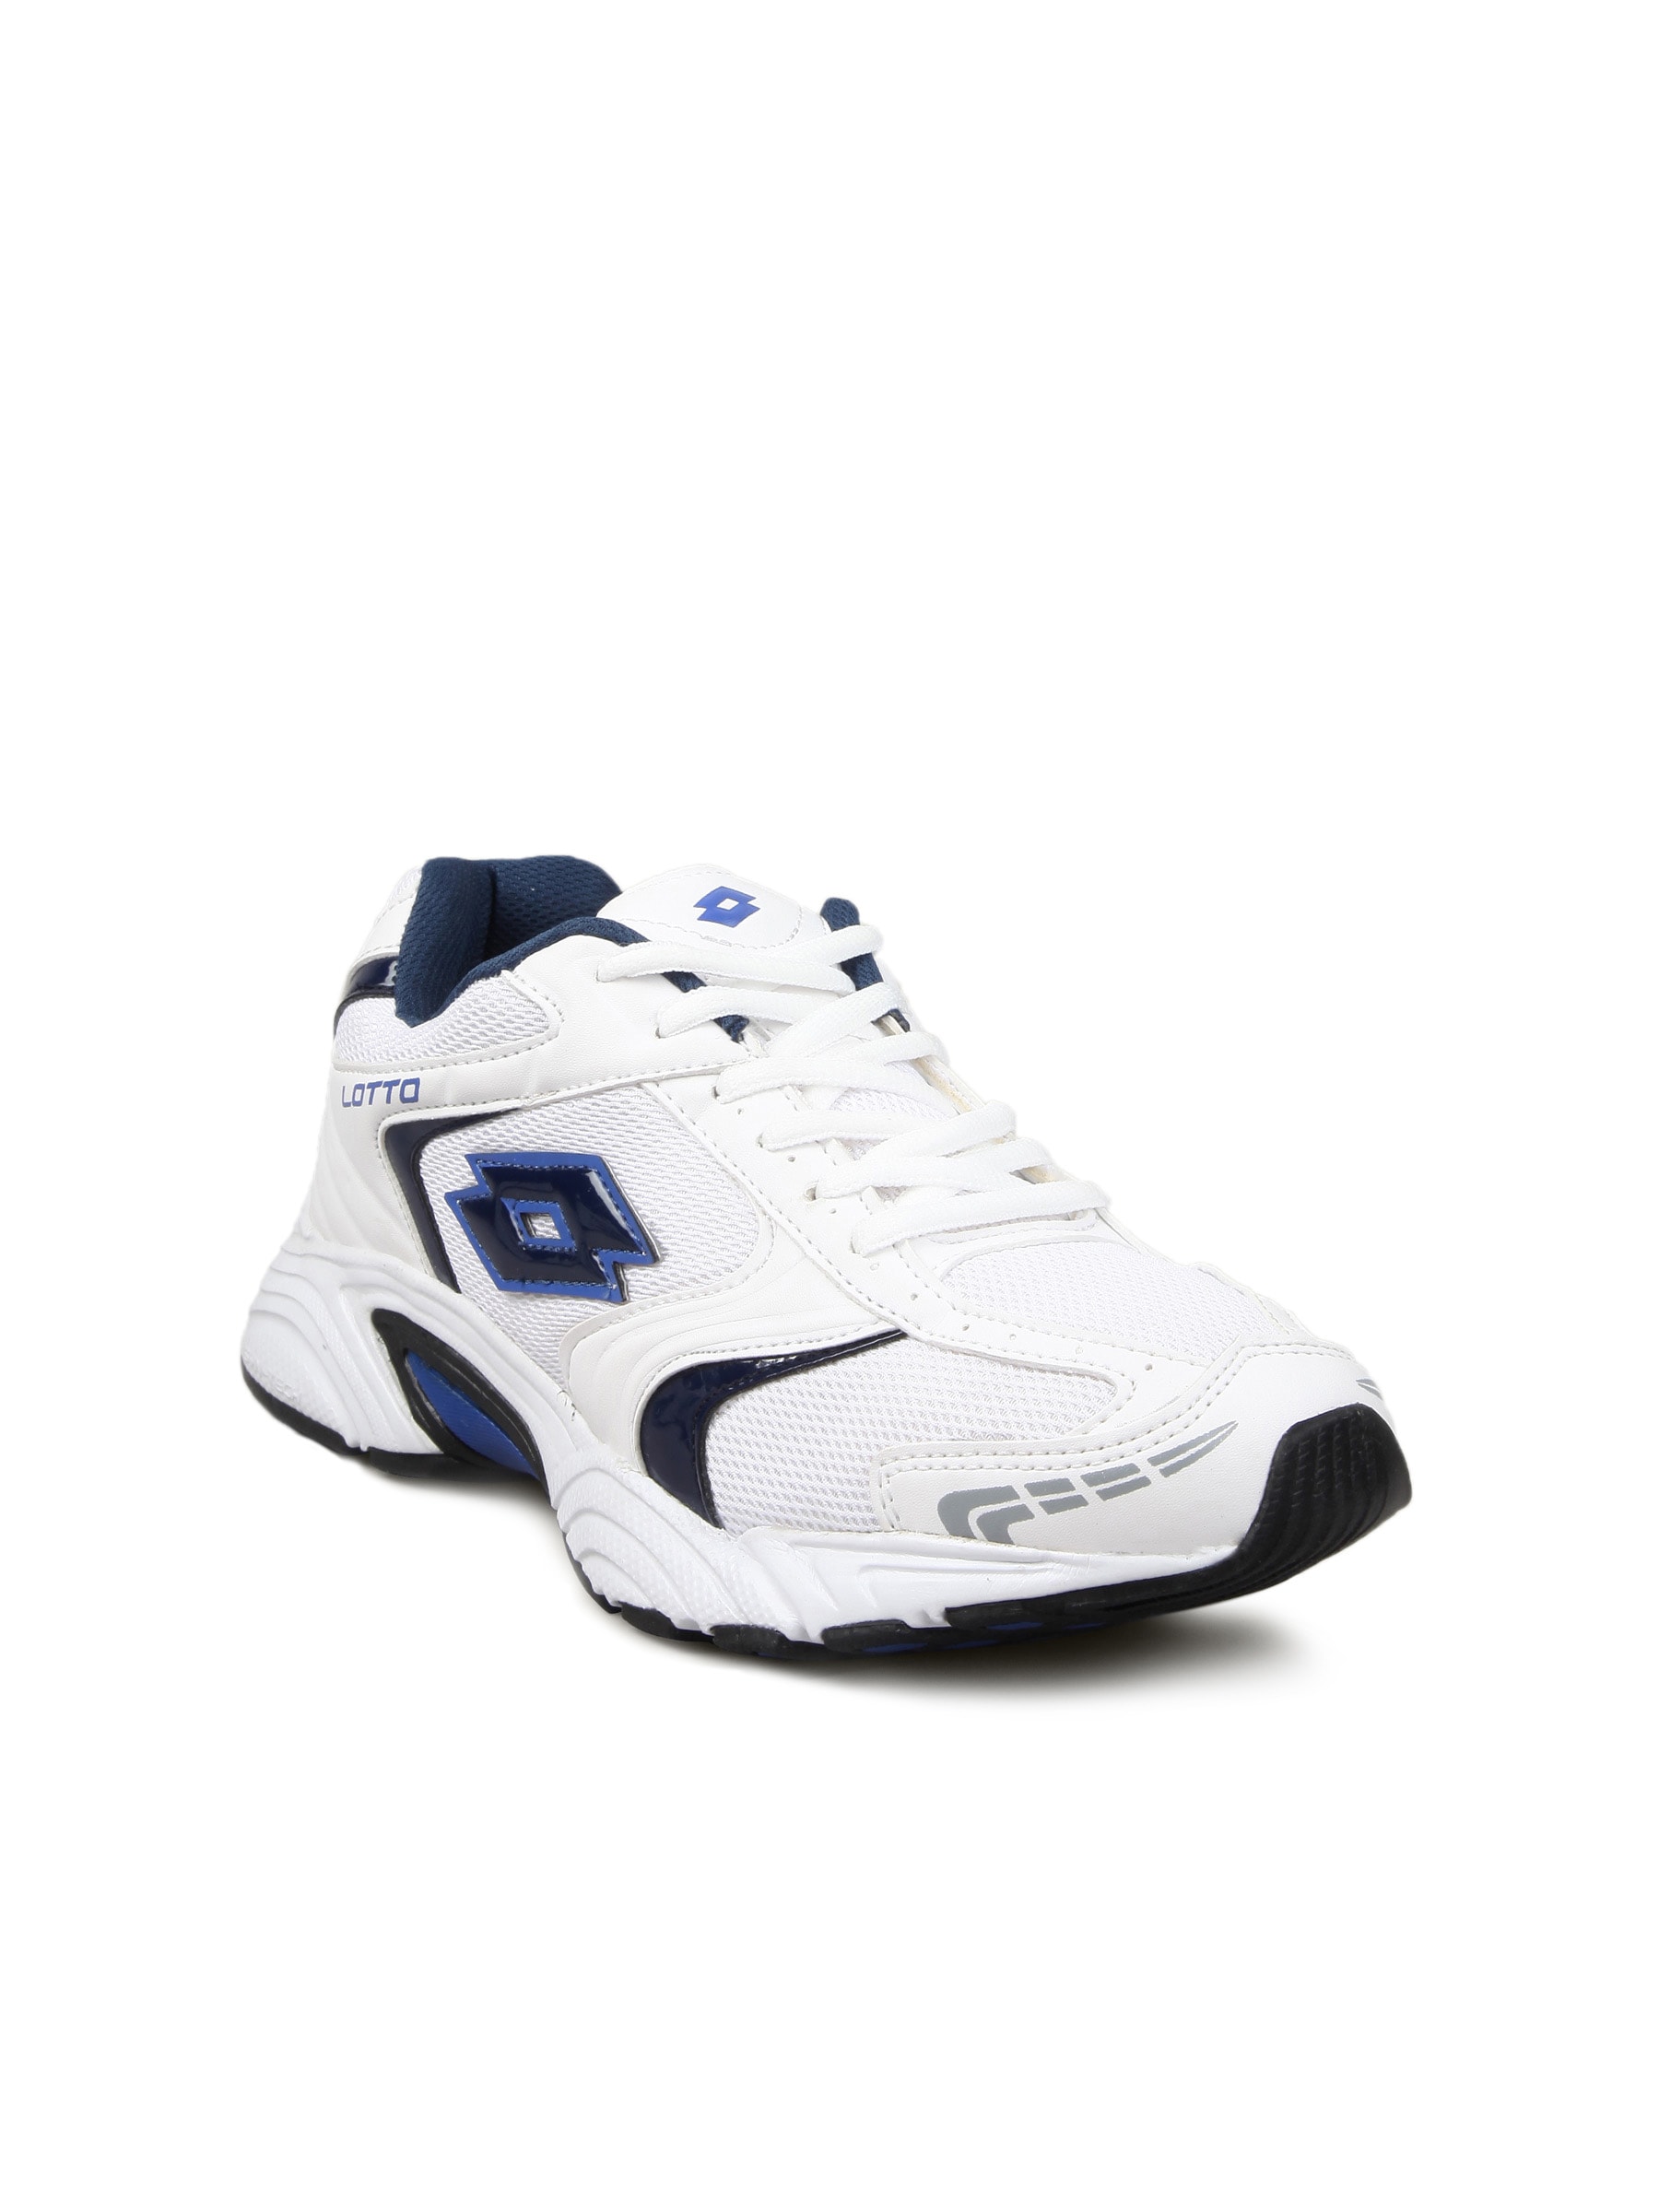 Lotto Men's Zurigo White Blue Shoe